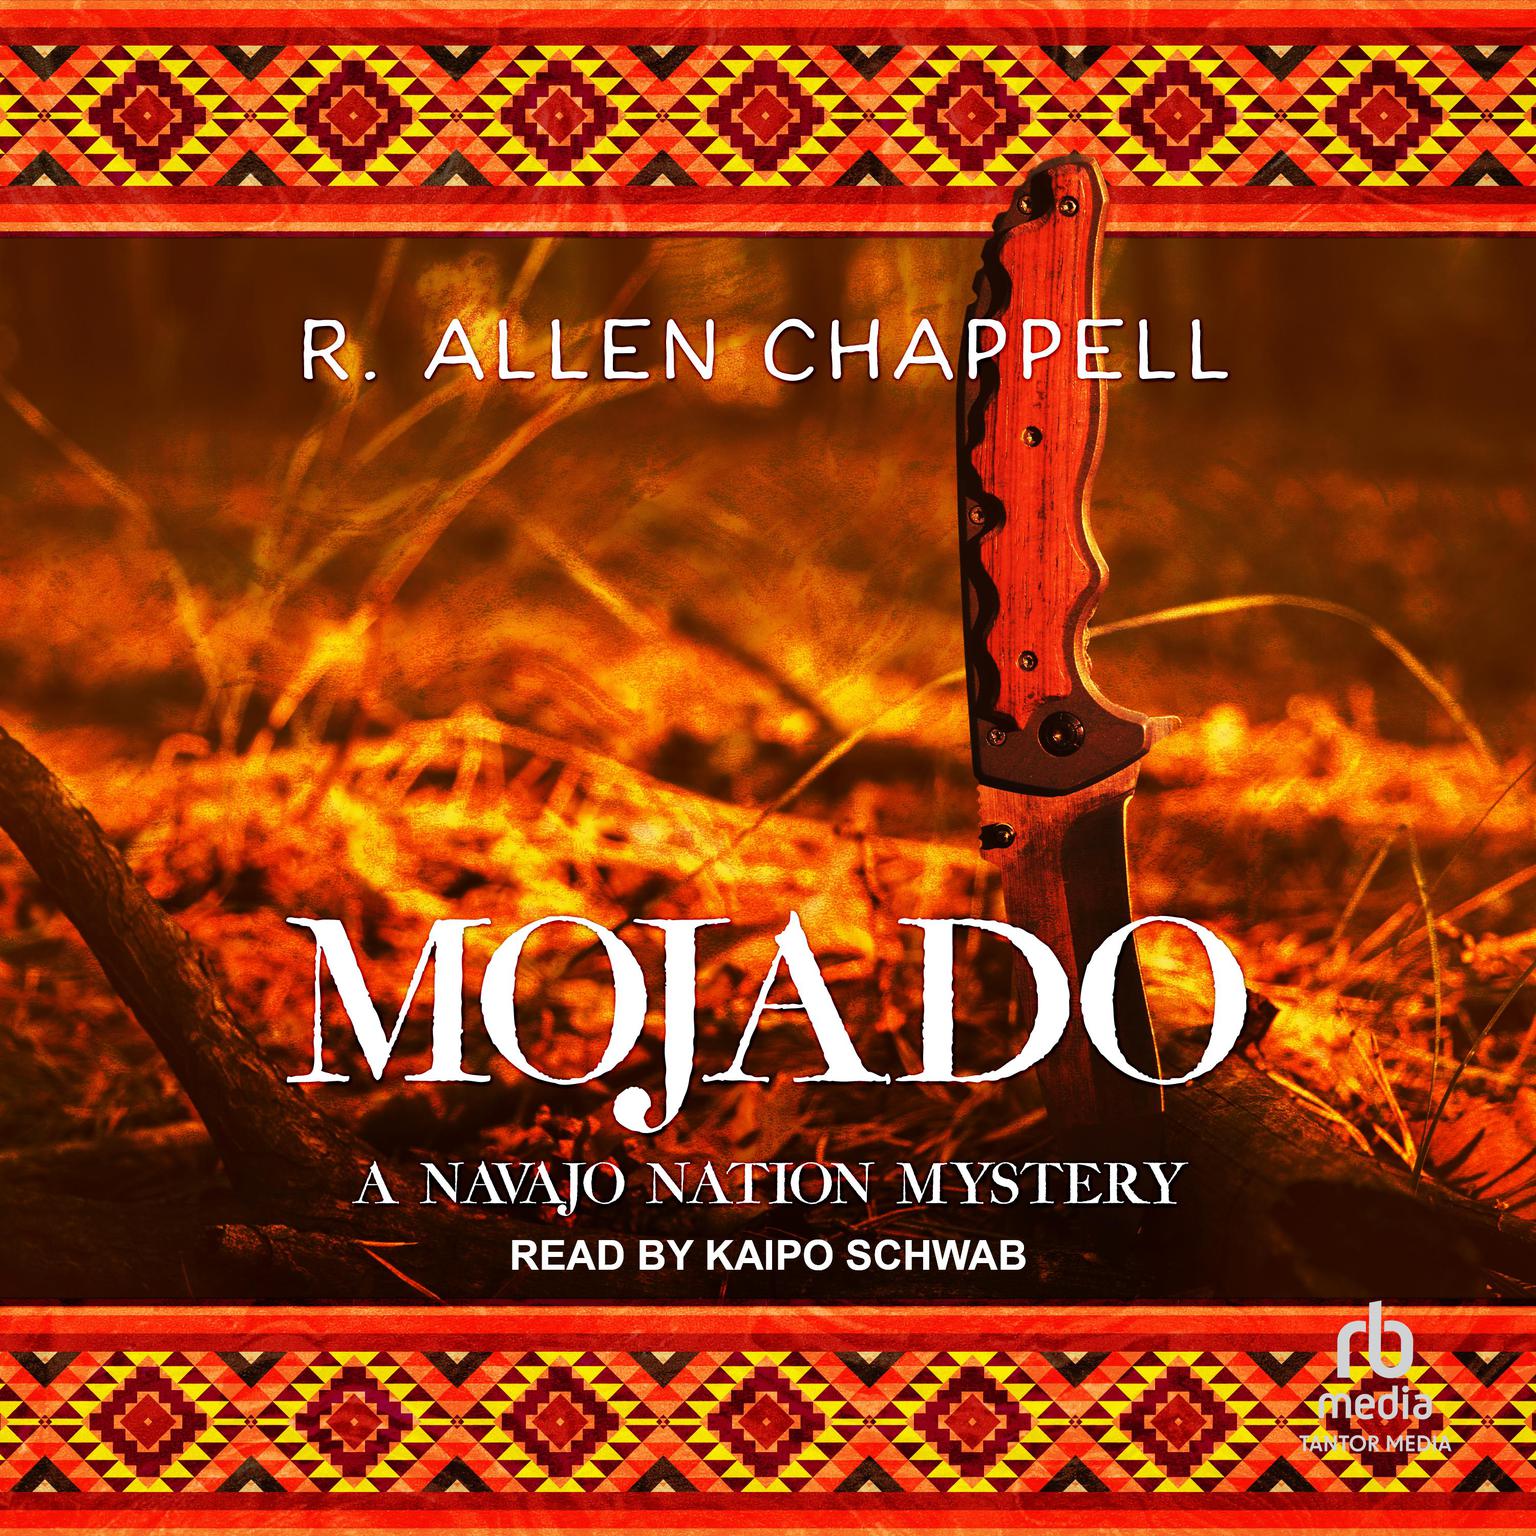 Mojado Audiobook, by R. Allen Chappell